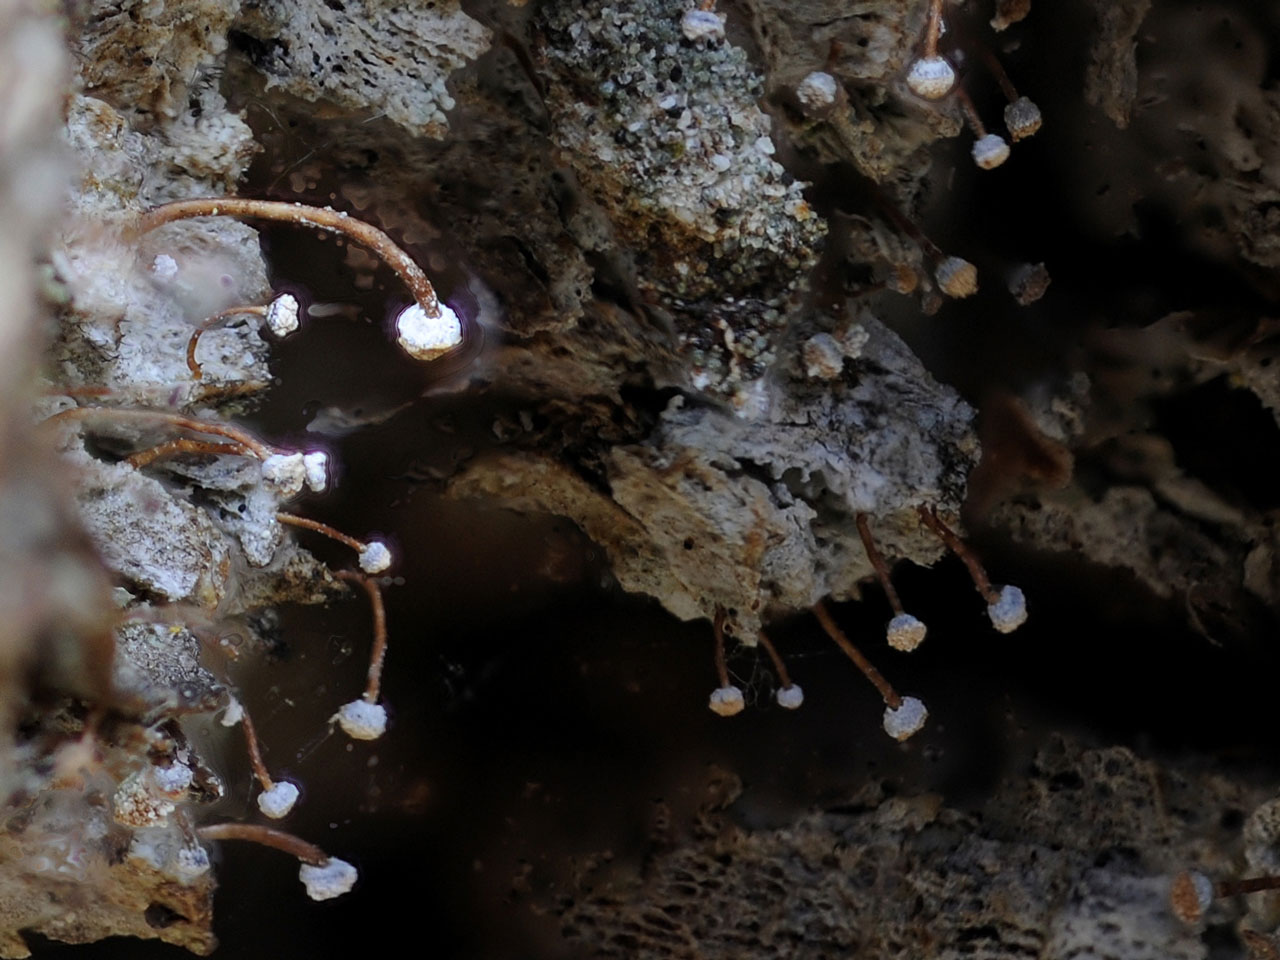 Sclerophora farinacea Norway, closer view  © E Timdal